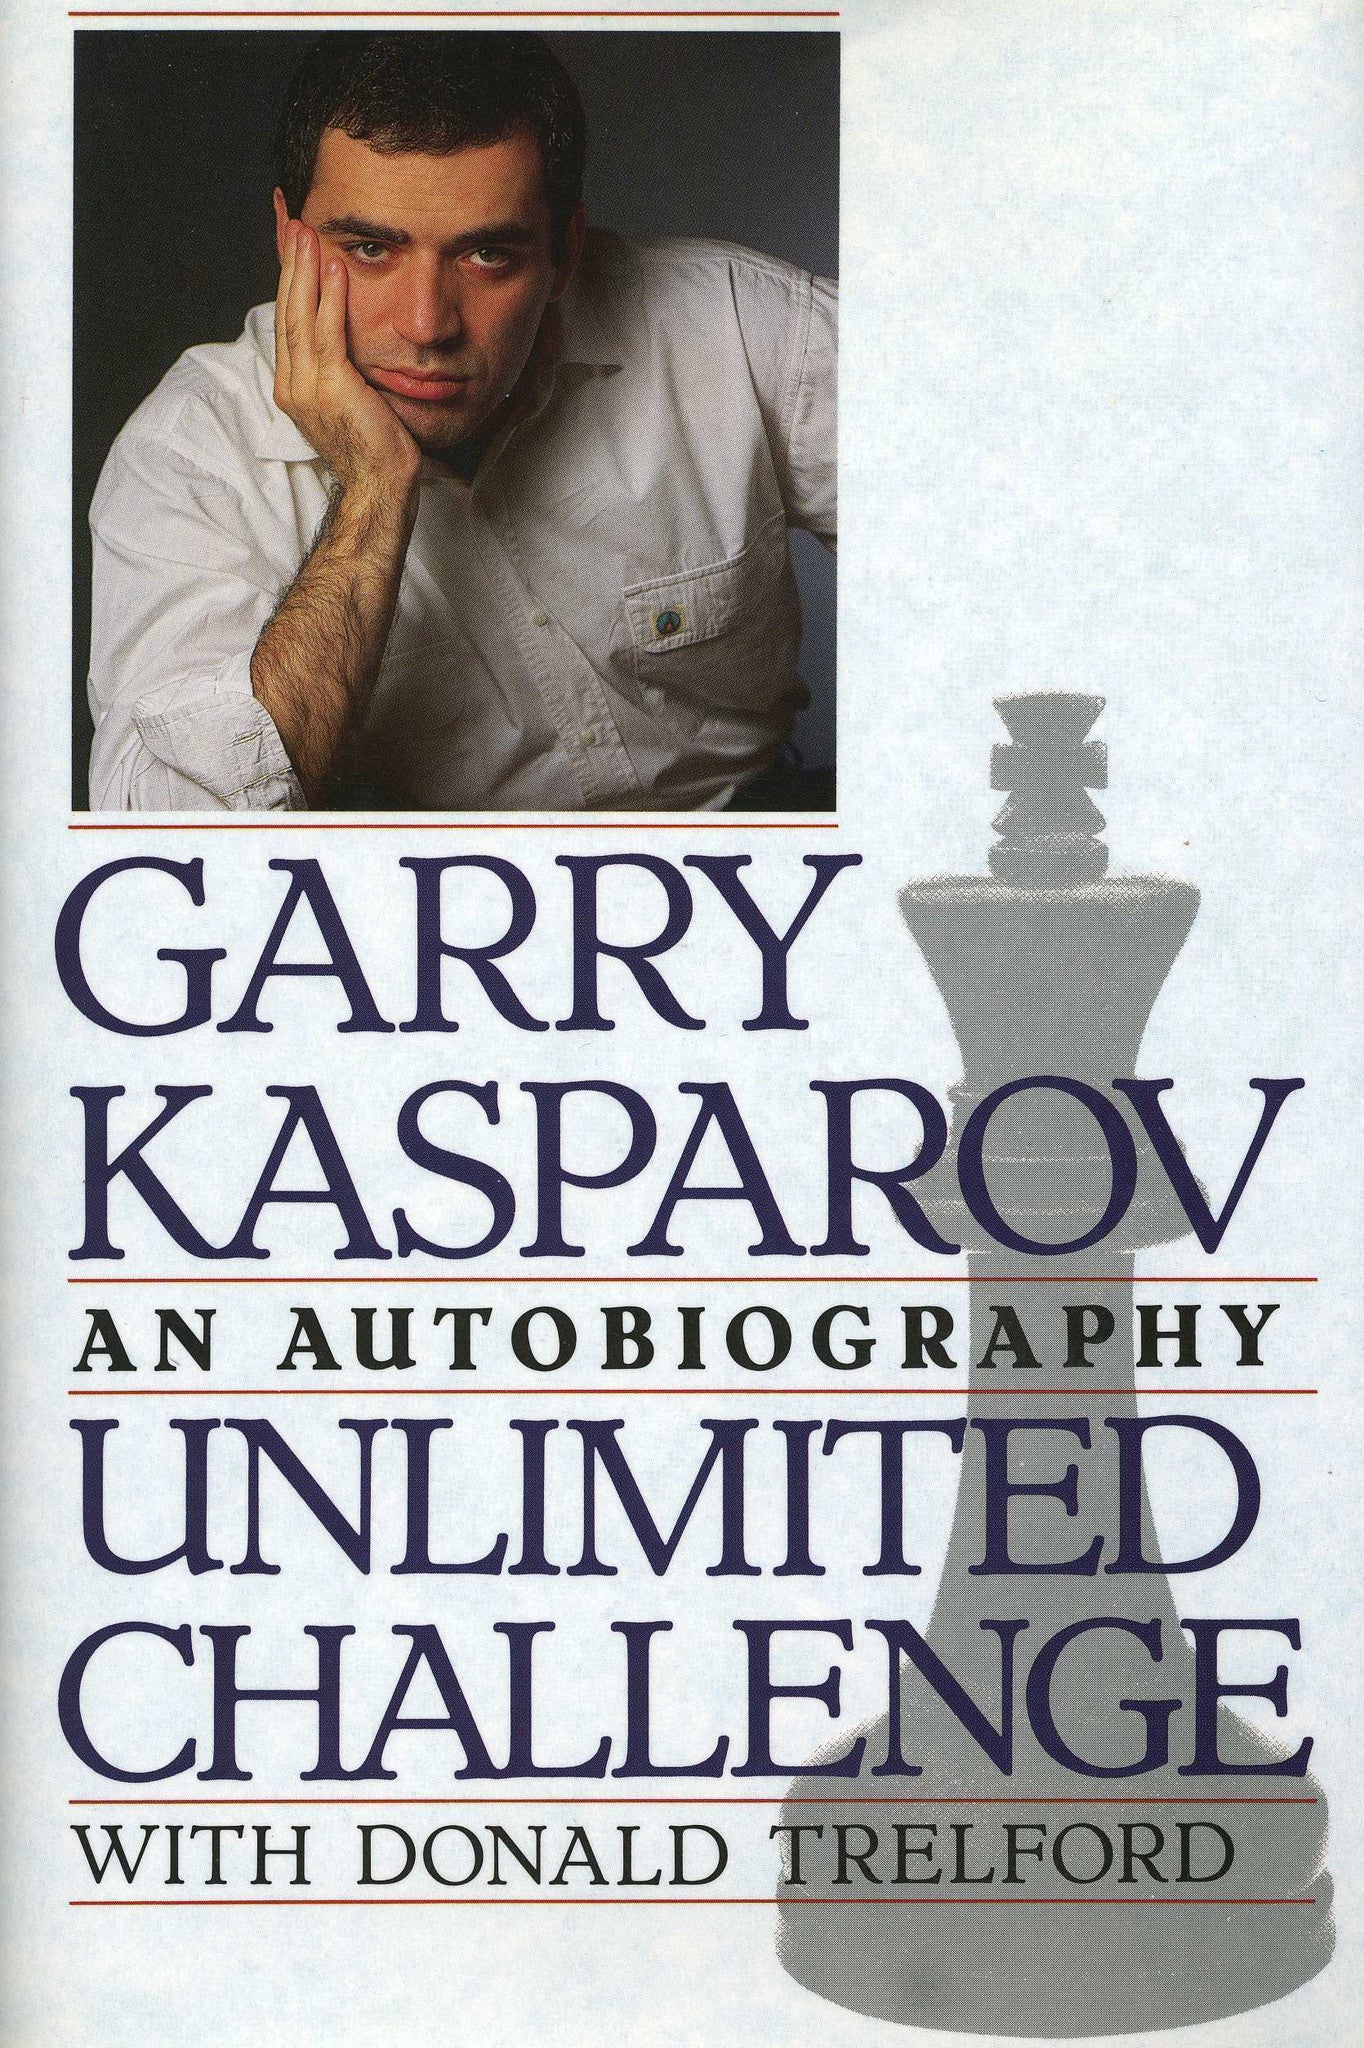  Anatoli Karpov: books, biography, latest update